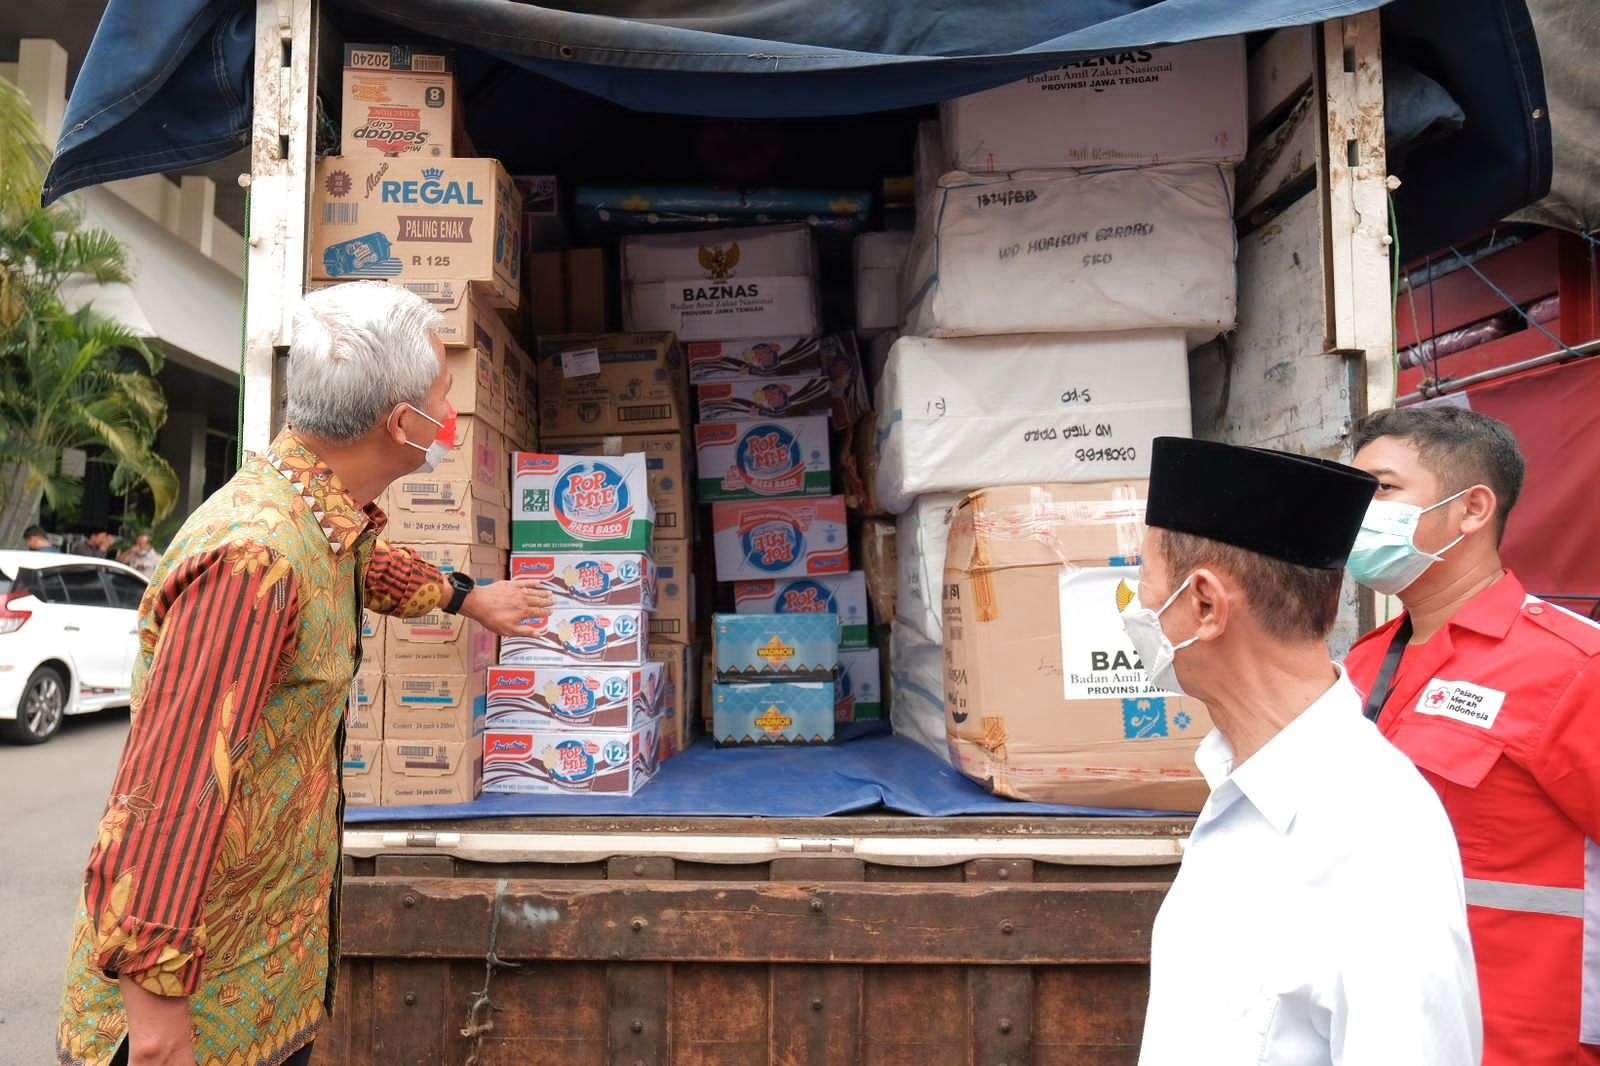 Gubernur Jawa Tengah Ganjar Pranowo melepas tim relawan gabungan serta bantuan untuk korban bencana gempa bumi di Cianjur. (Foto: Dokumentasi Jateng)